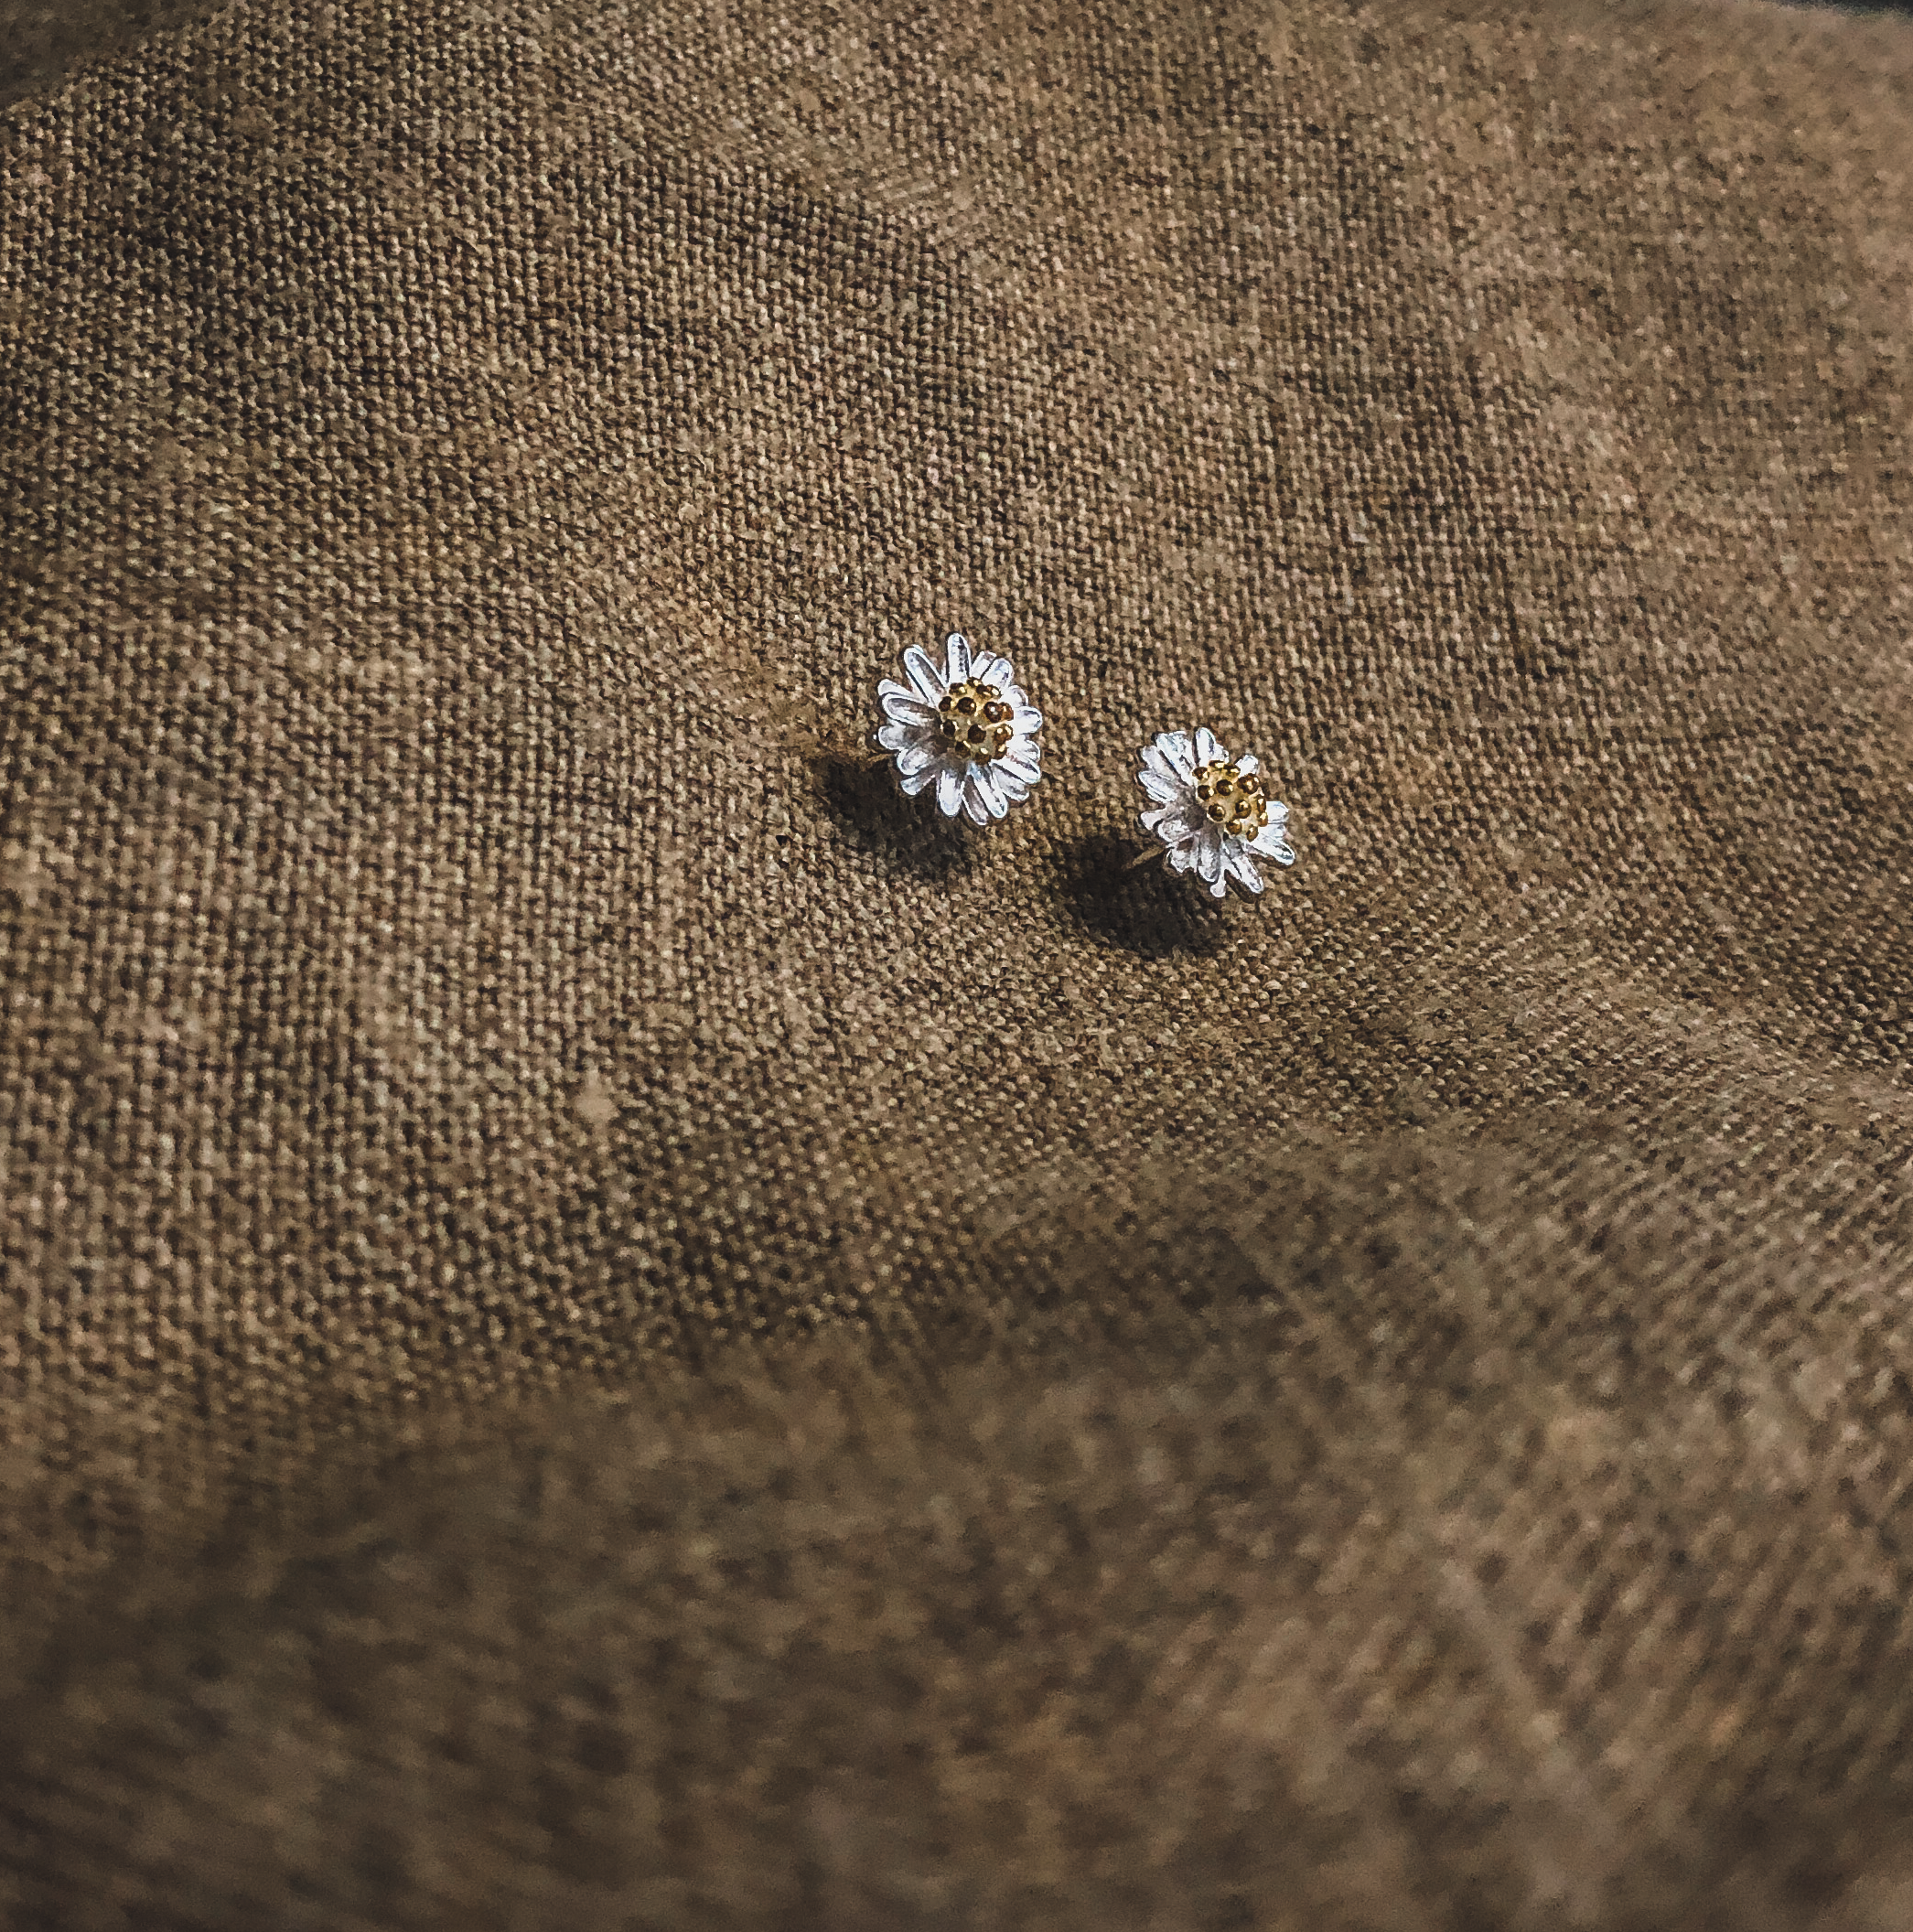 Daisy Stud Earrings by Veronique 925